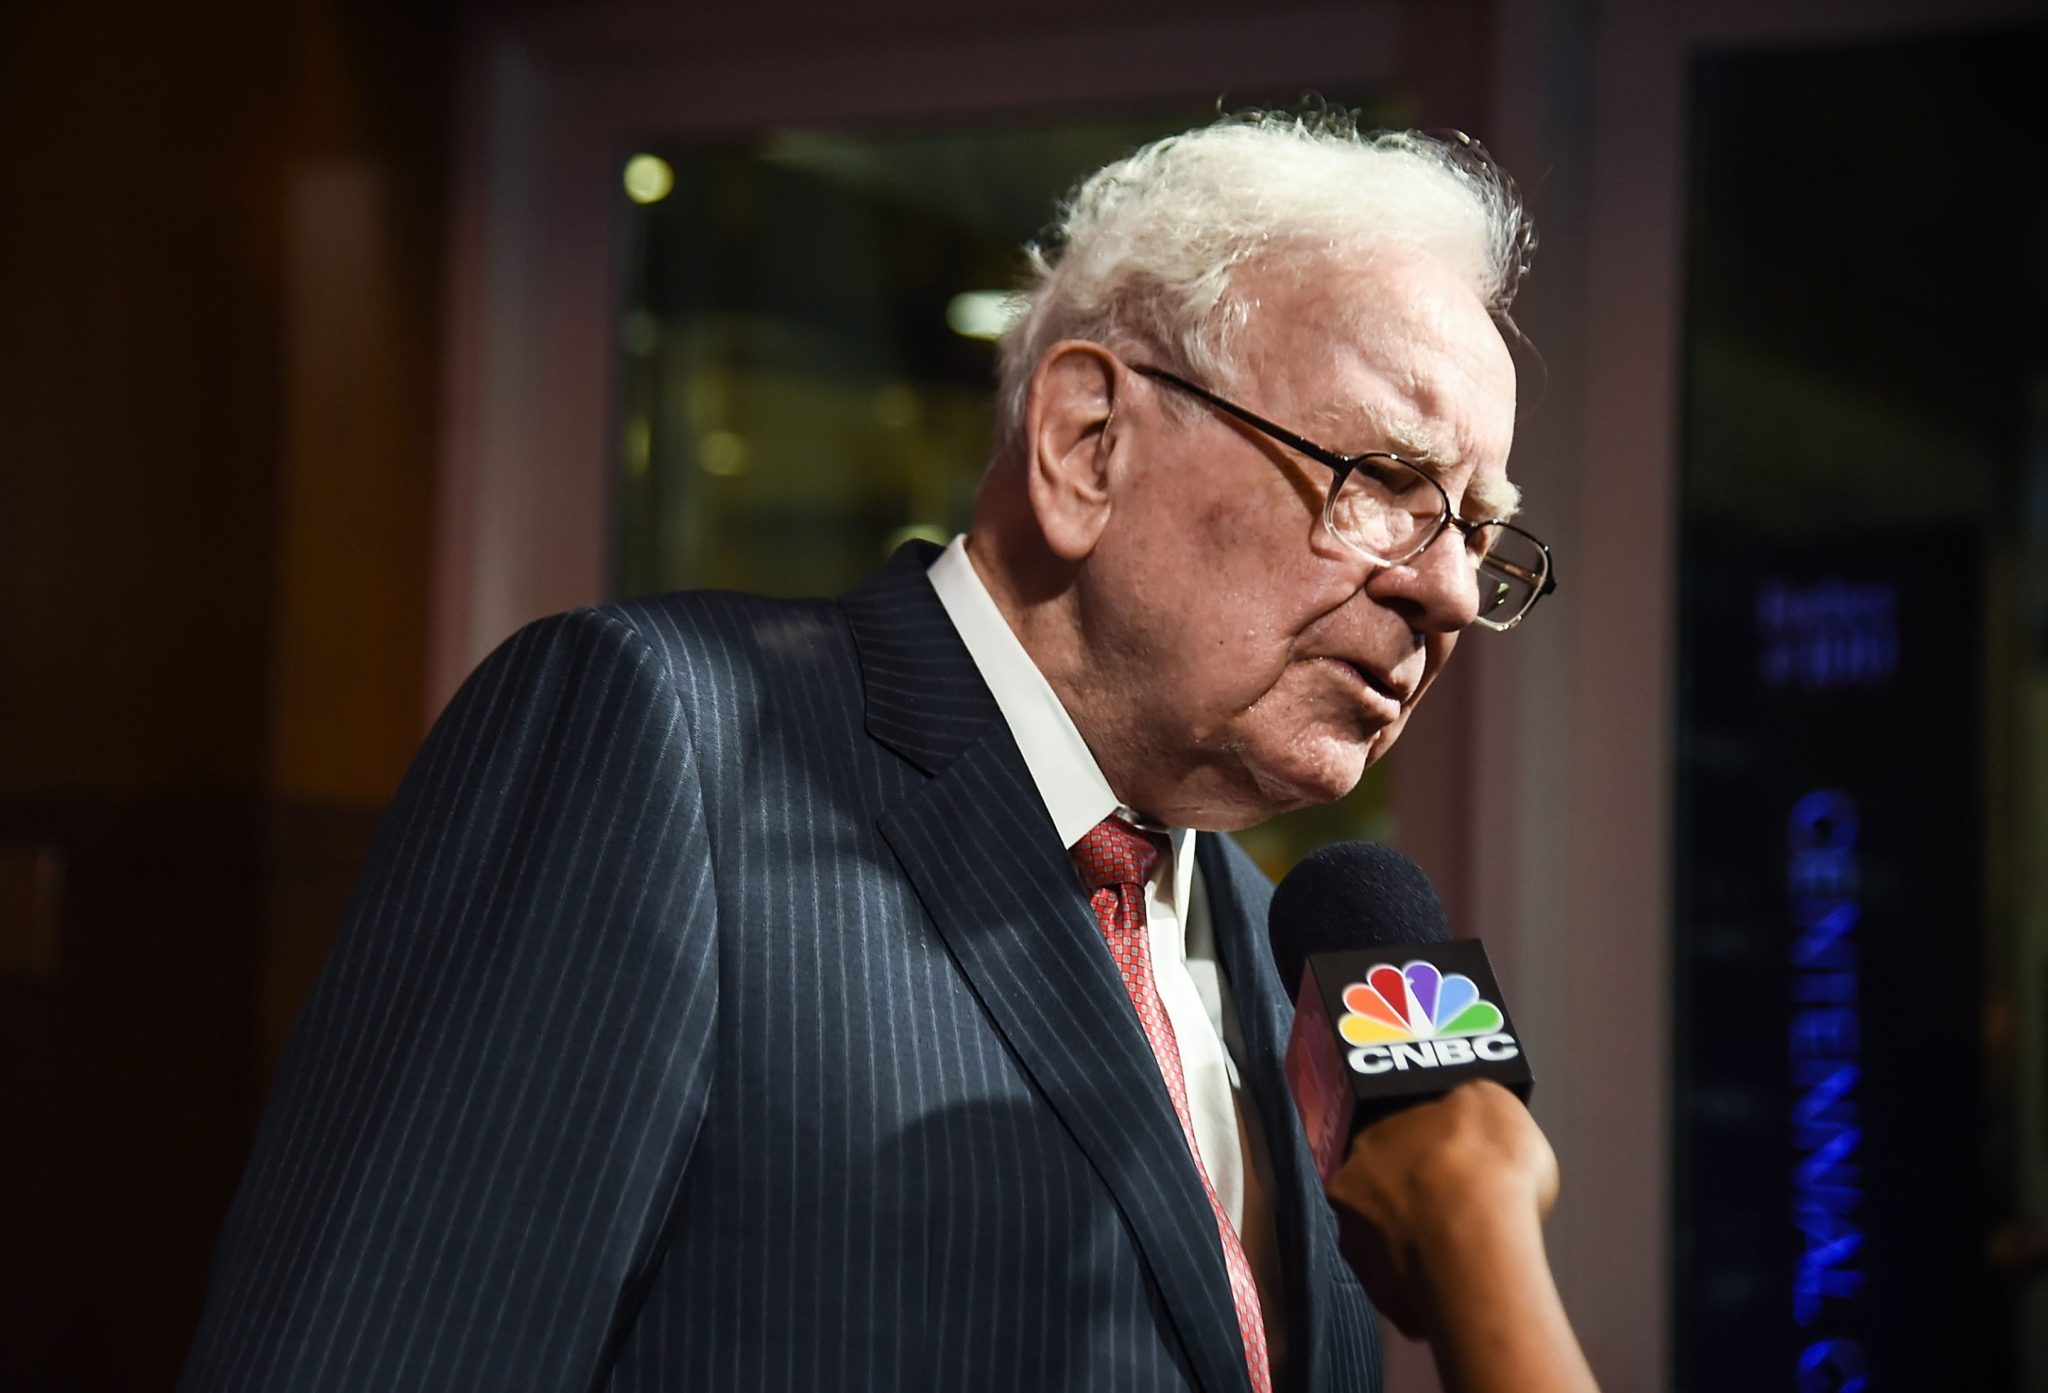 Warren Buffett tells Citi CEO to continue bank overhaul: Report